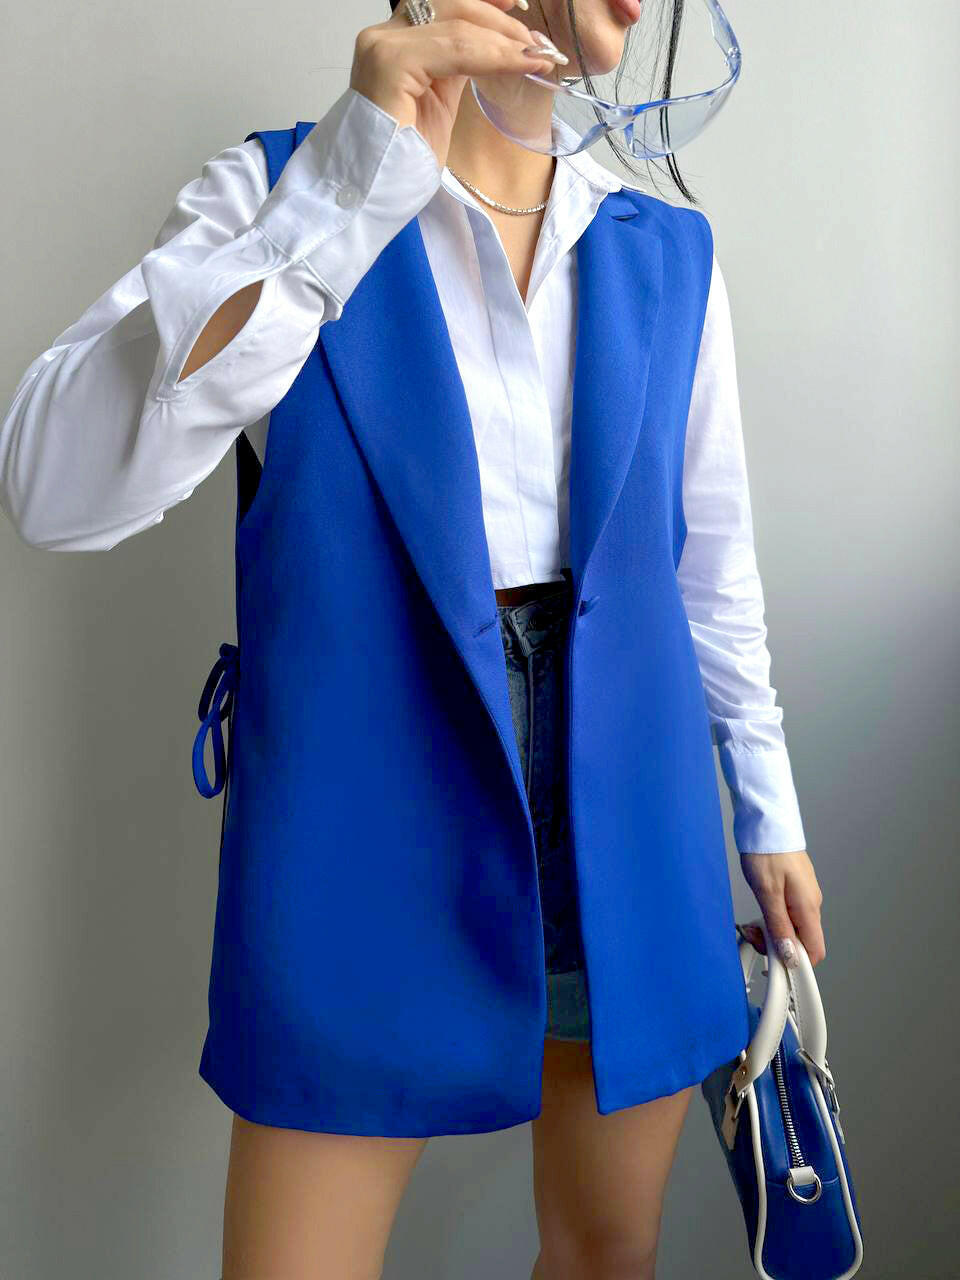 Sleeveless Blazer Vest with Side Tie Up in Blue - Noxlook